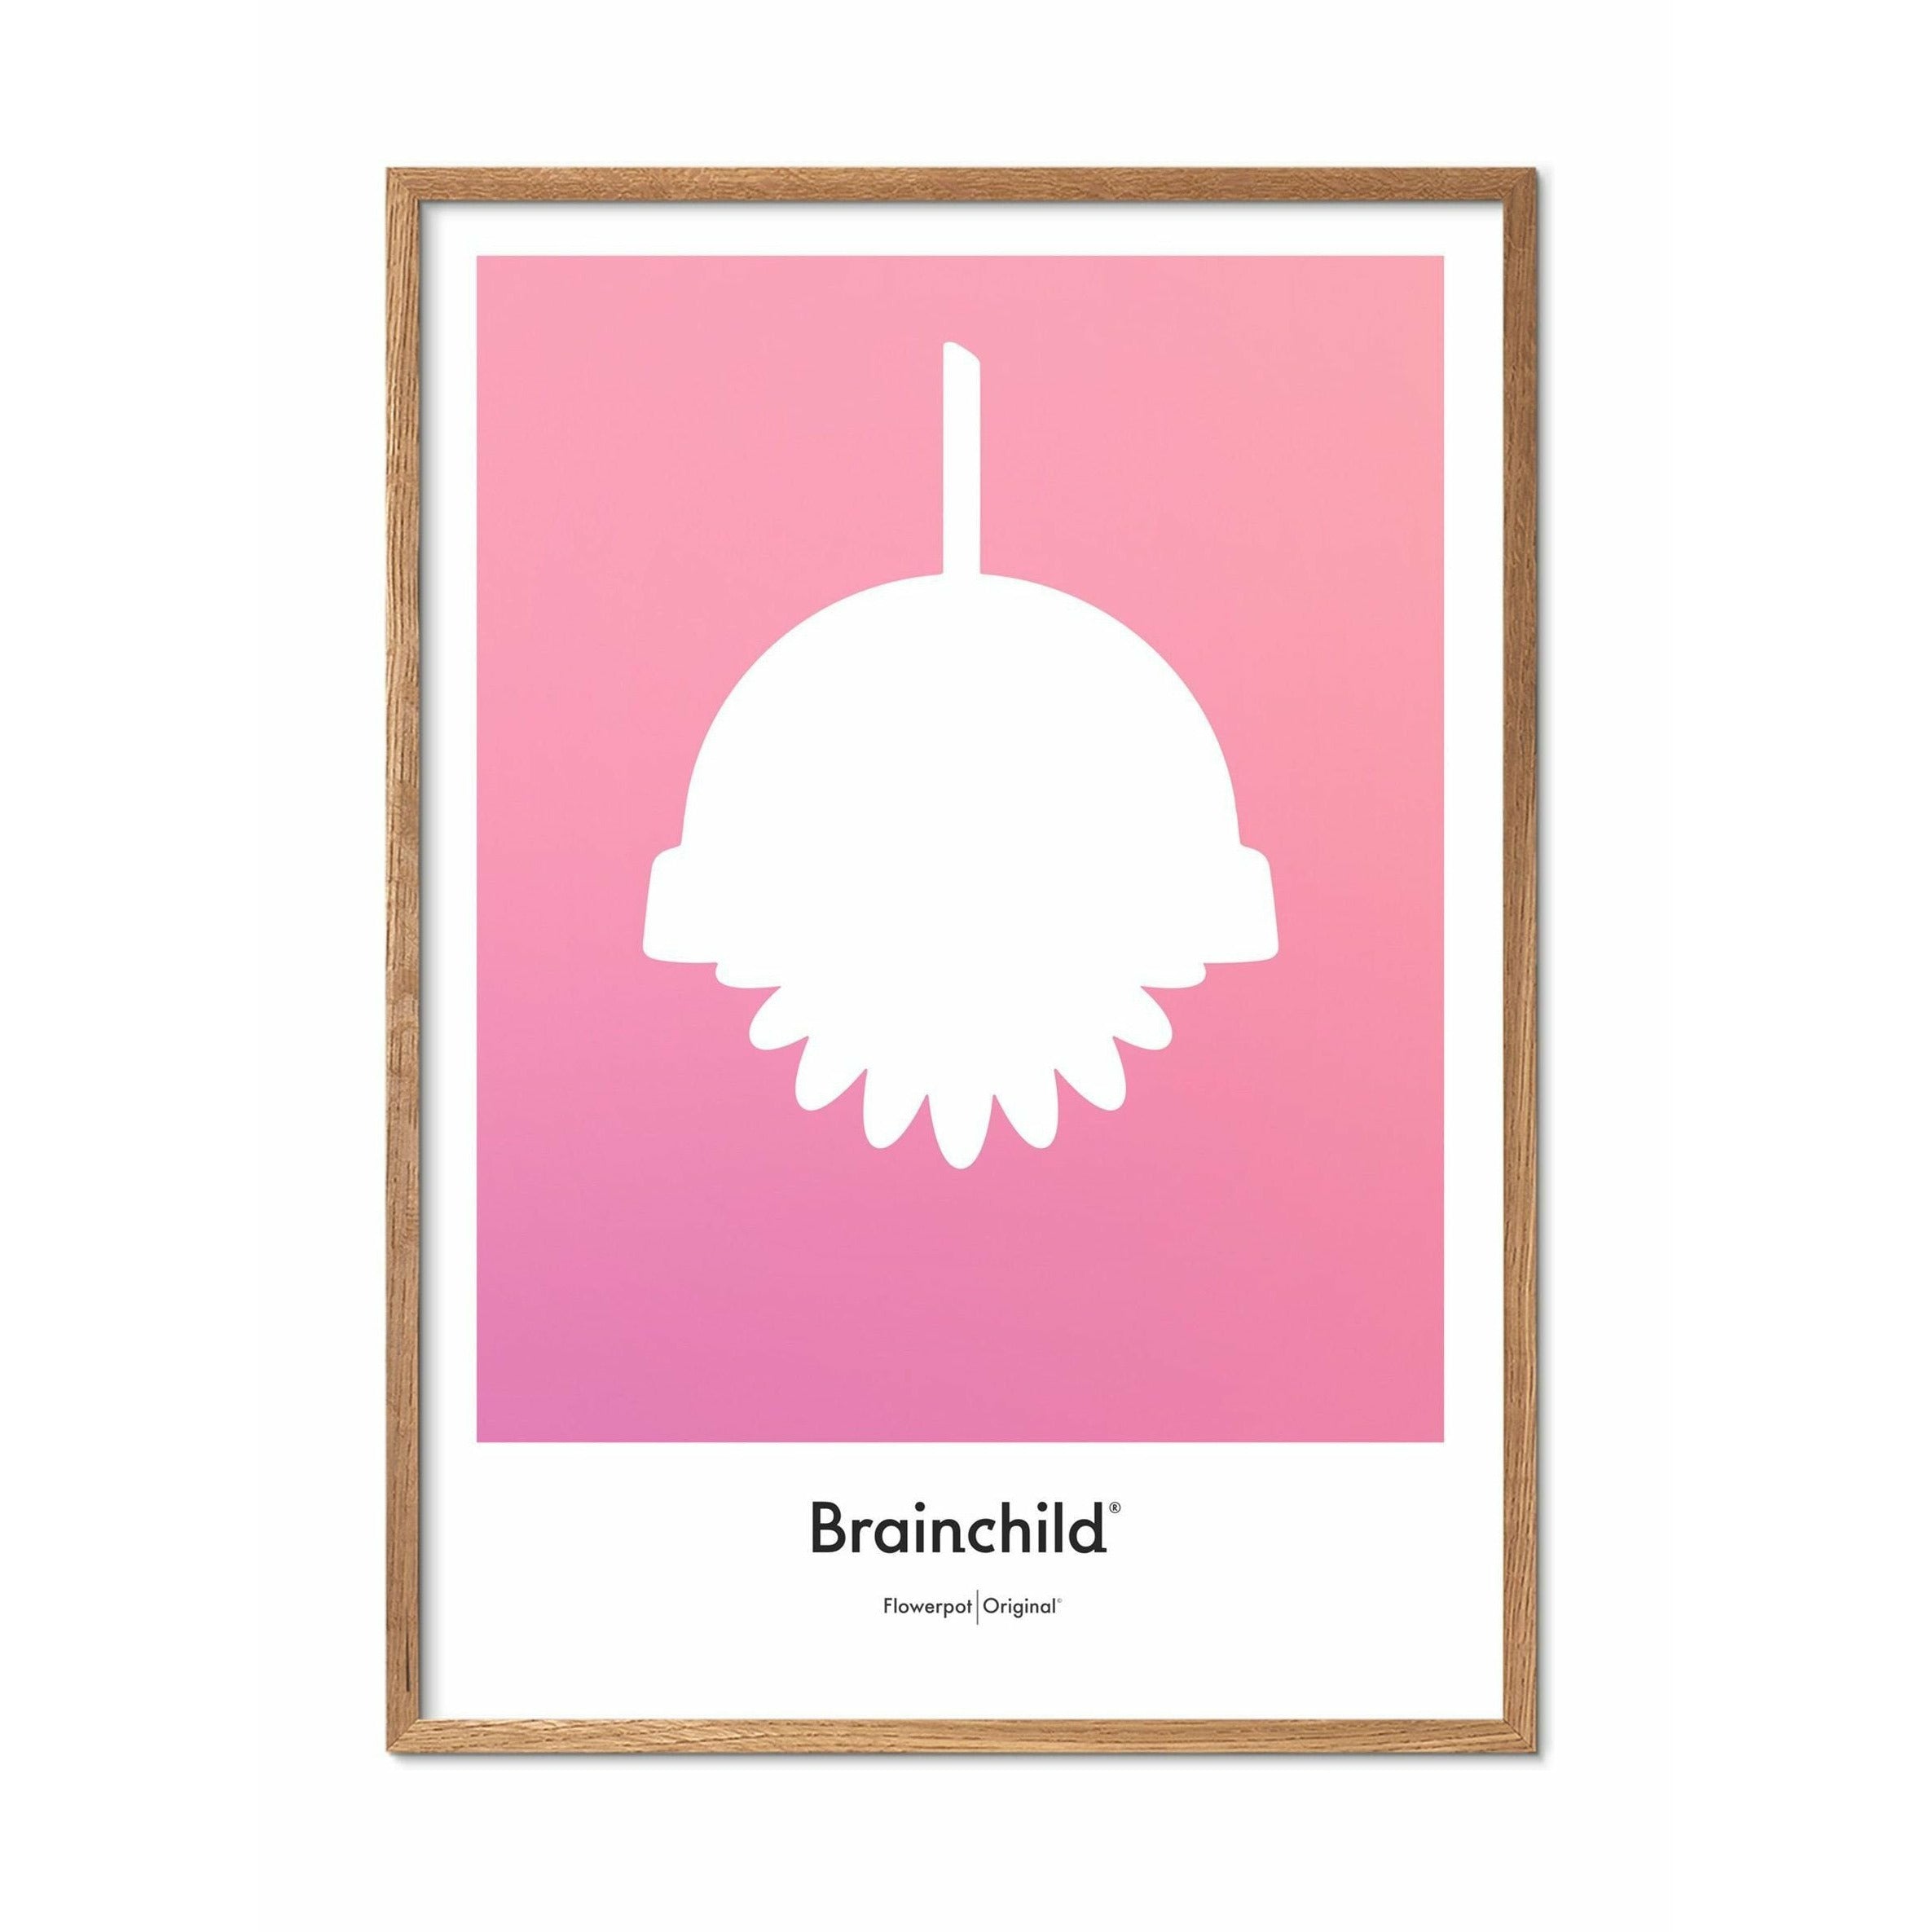 Brainchild Blumentopf Design Icon Poster, Rahmen aus hellem Holz 70 X100 Cm, Rosa